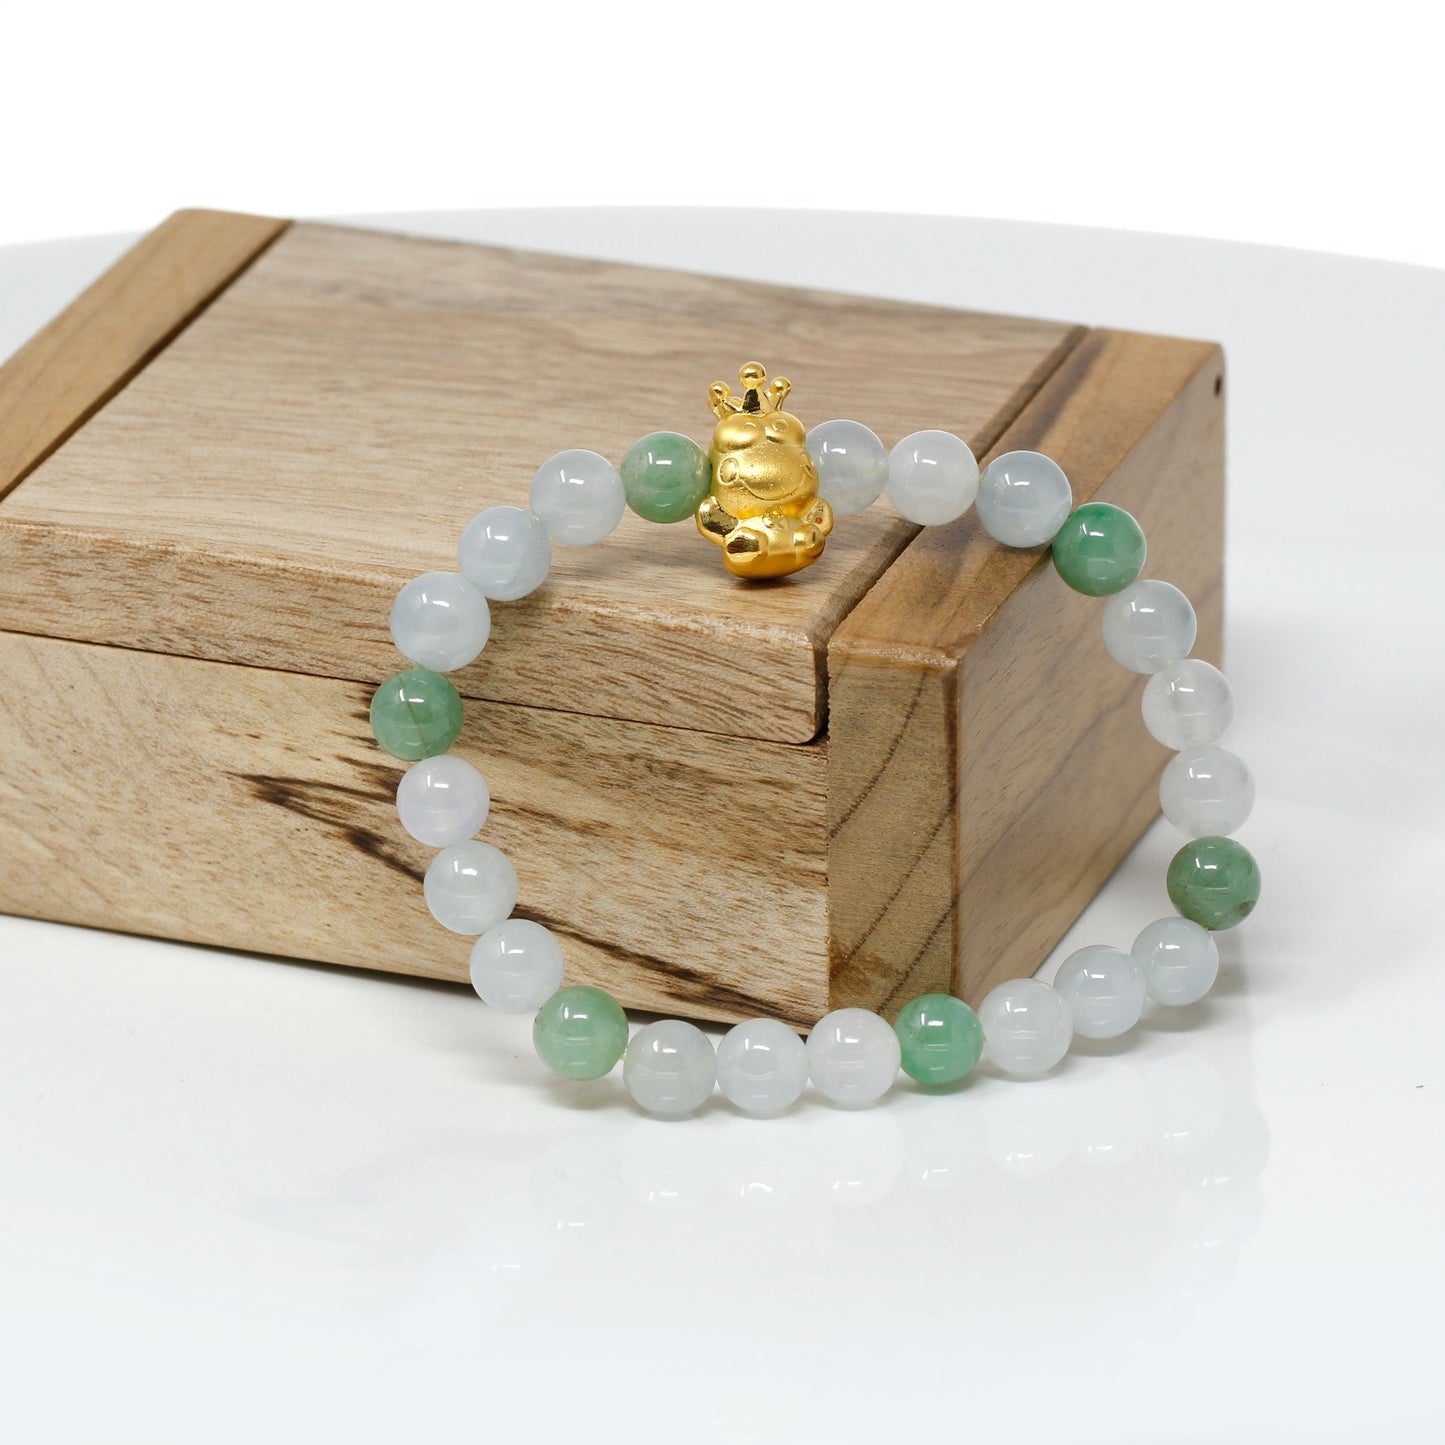 RealJade™ Jewelry | Authentic, Unterated Jadeite Jade Pendant Necklace | Real Jade Jewelry | Jade Buddha Dharma